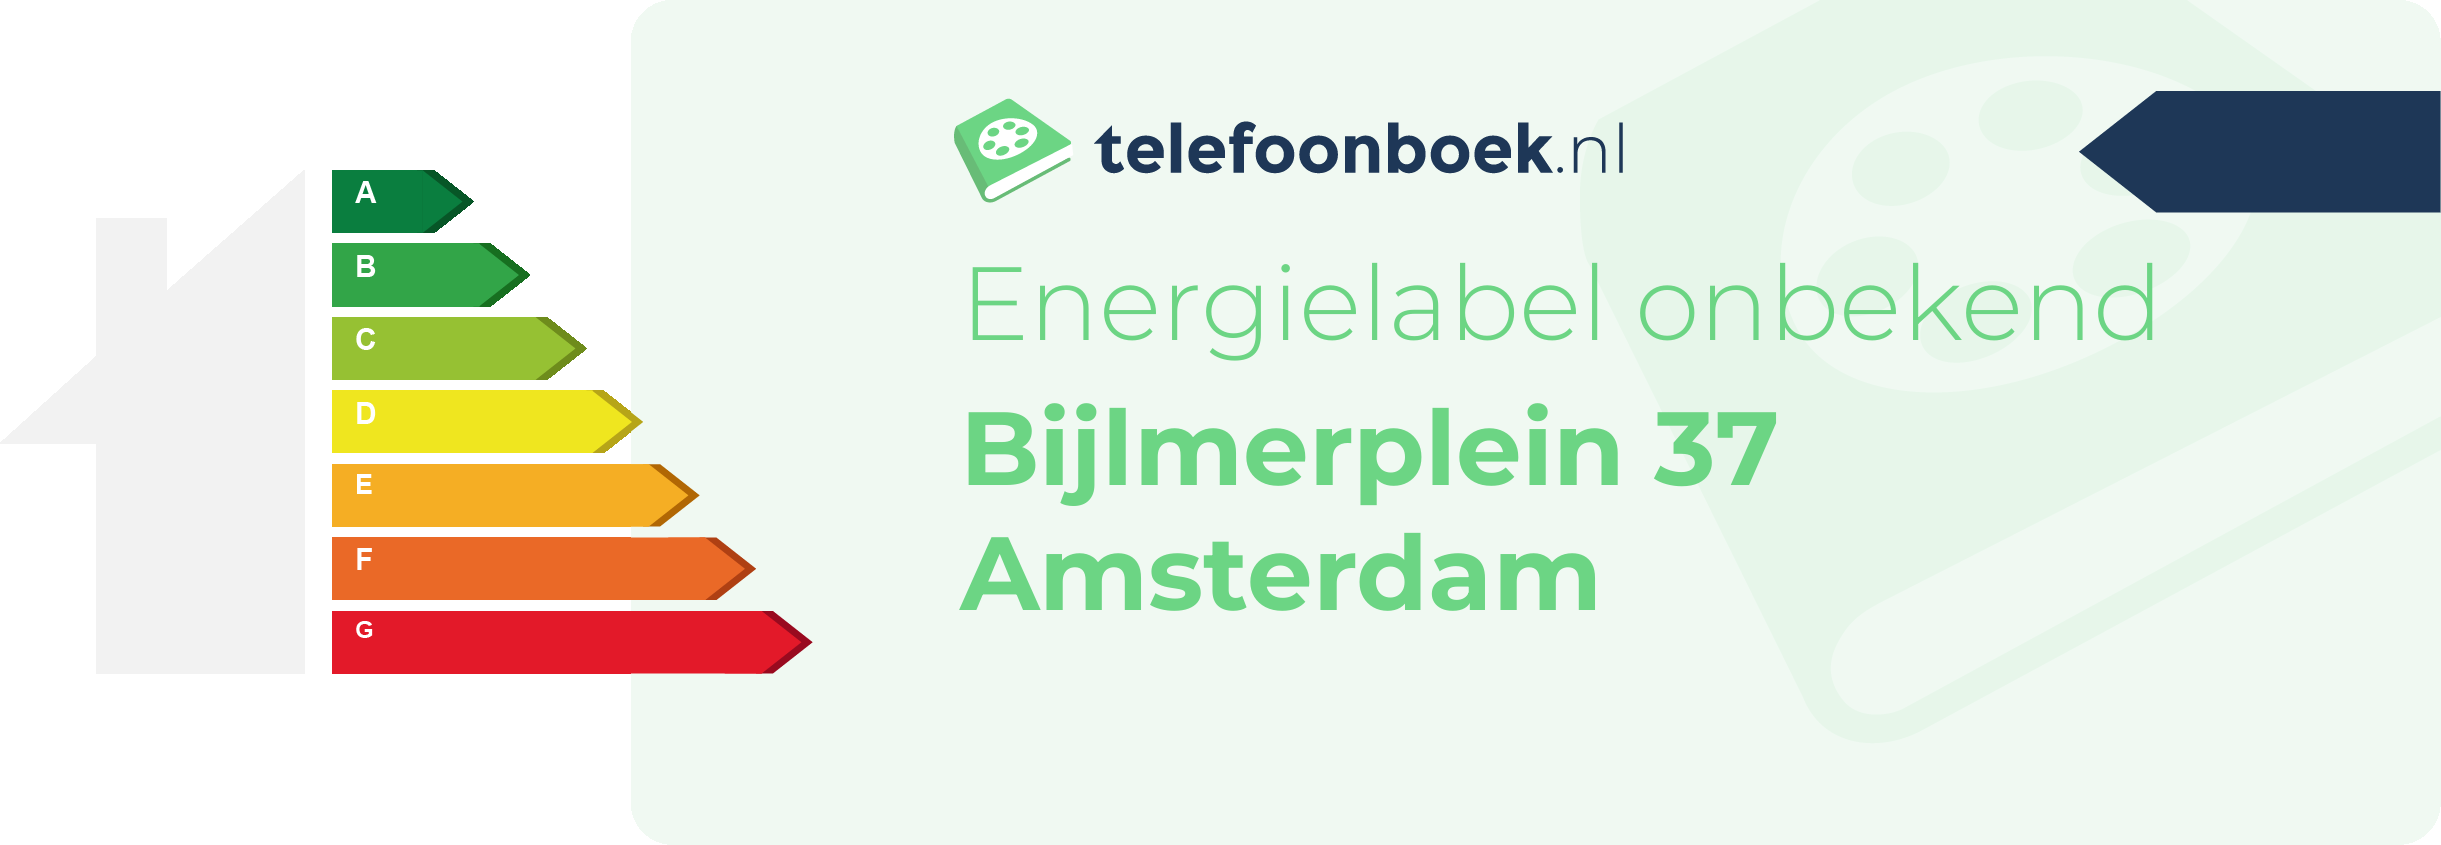 Energielabel Bijlmerplein 37 Amsterdam